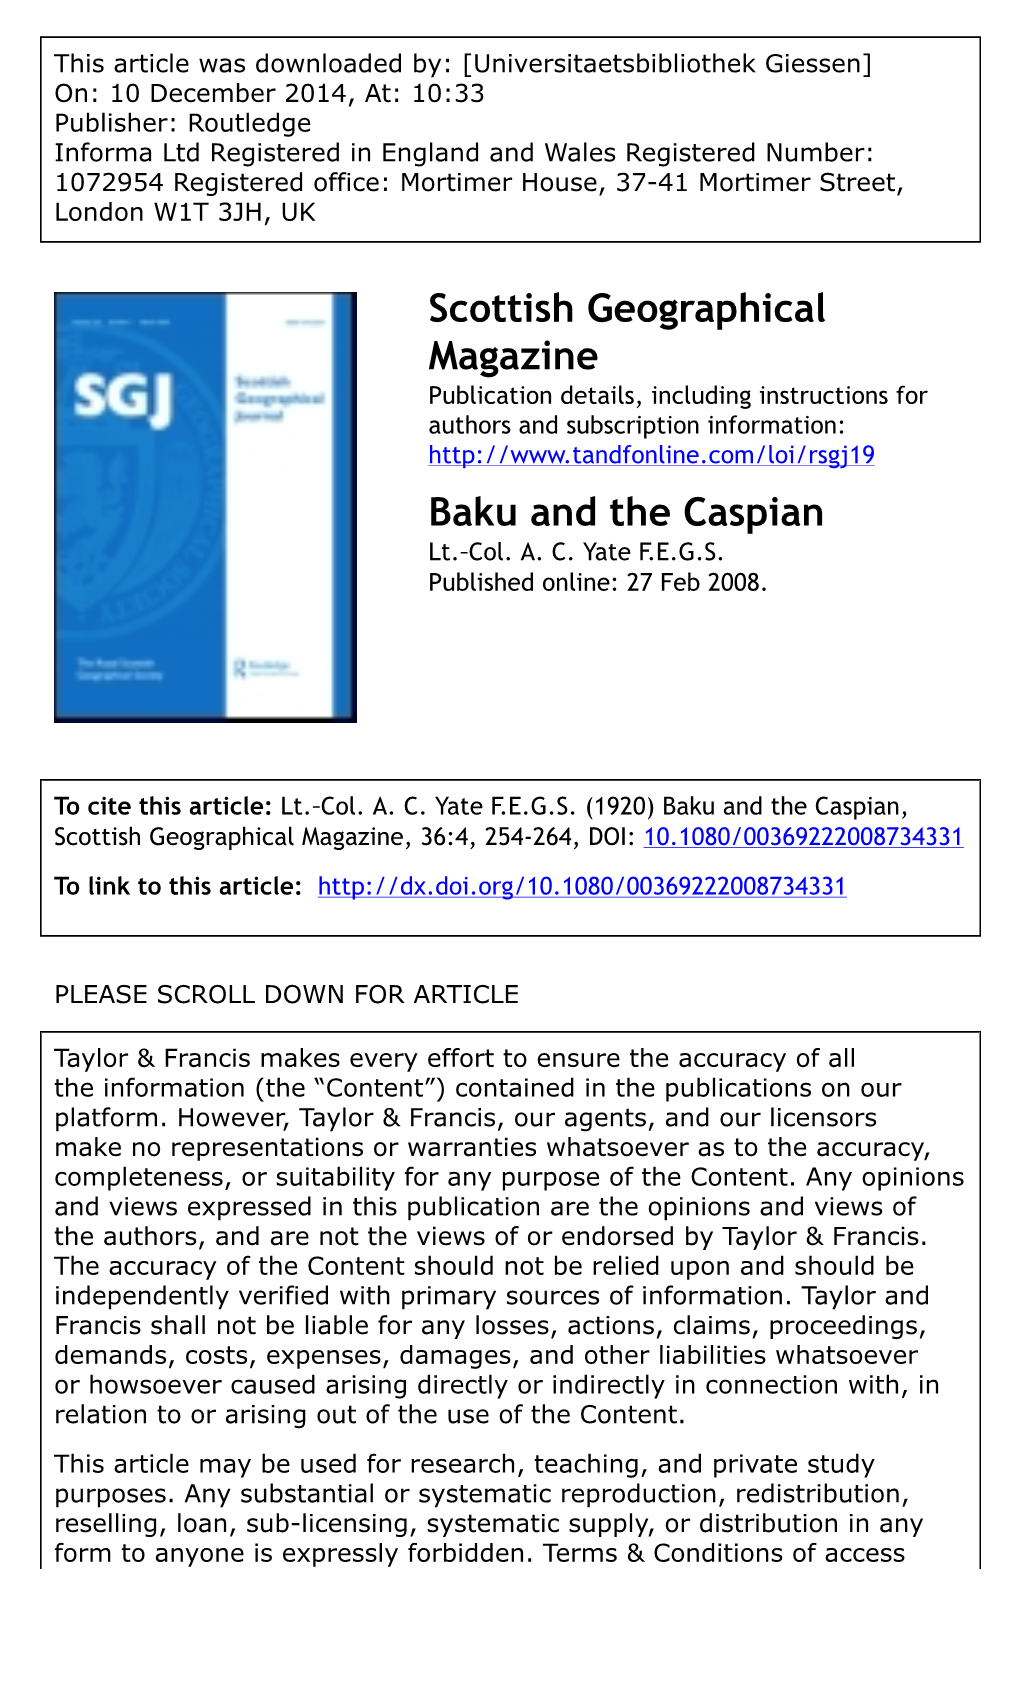 Scottish Geographical Magazine Baku and the Caspian